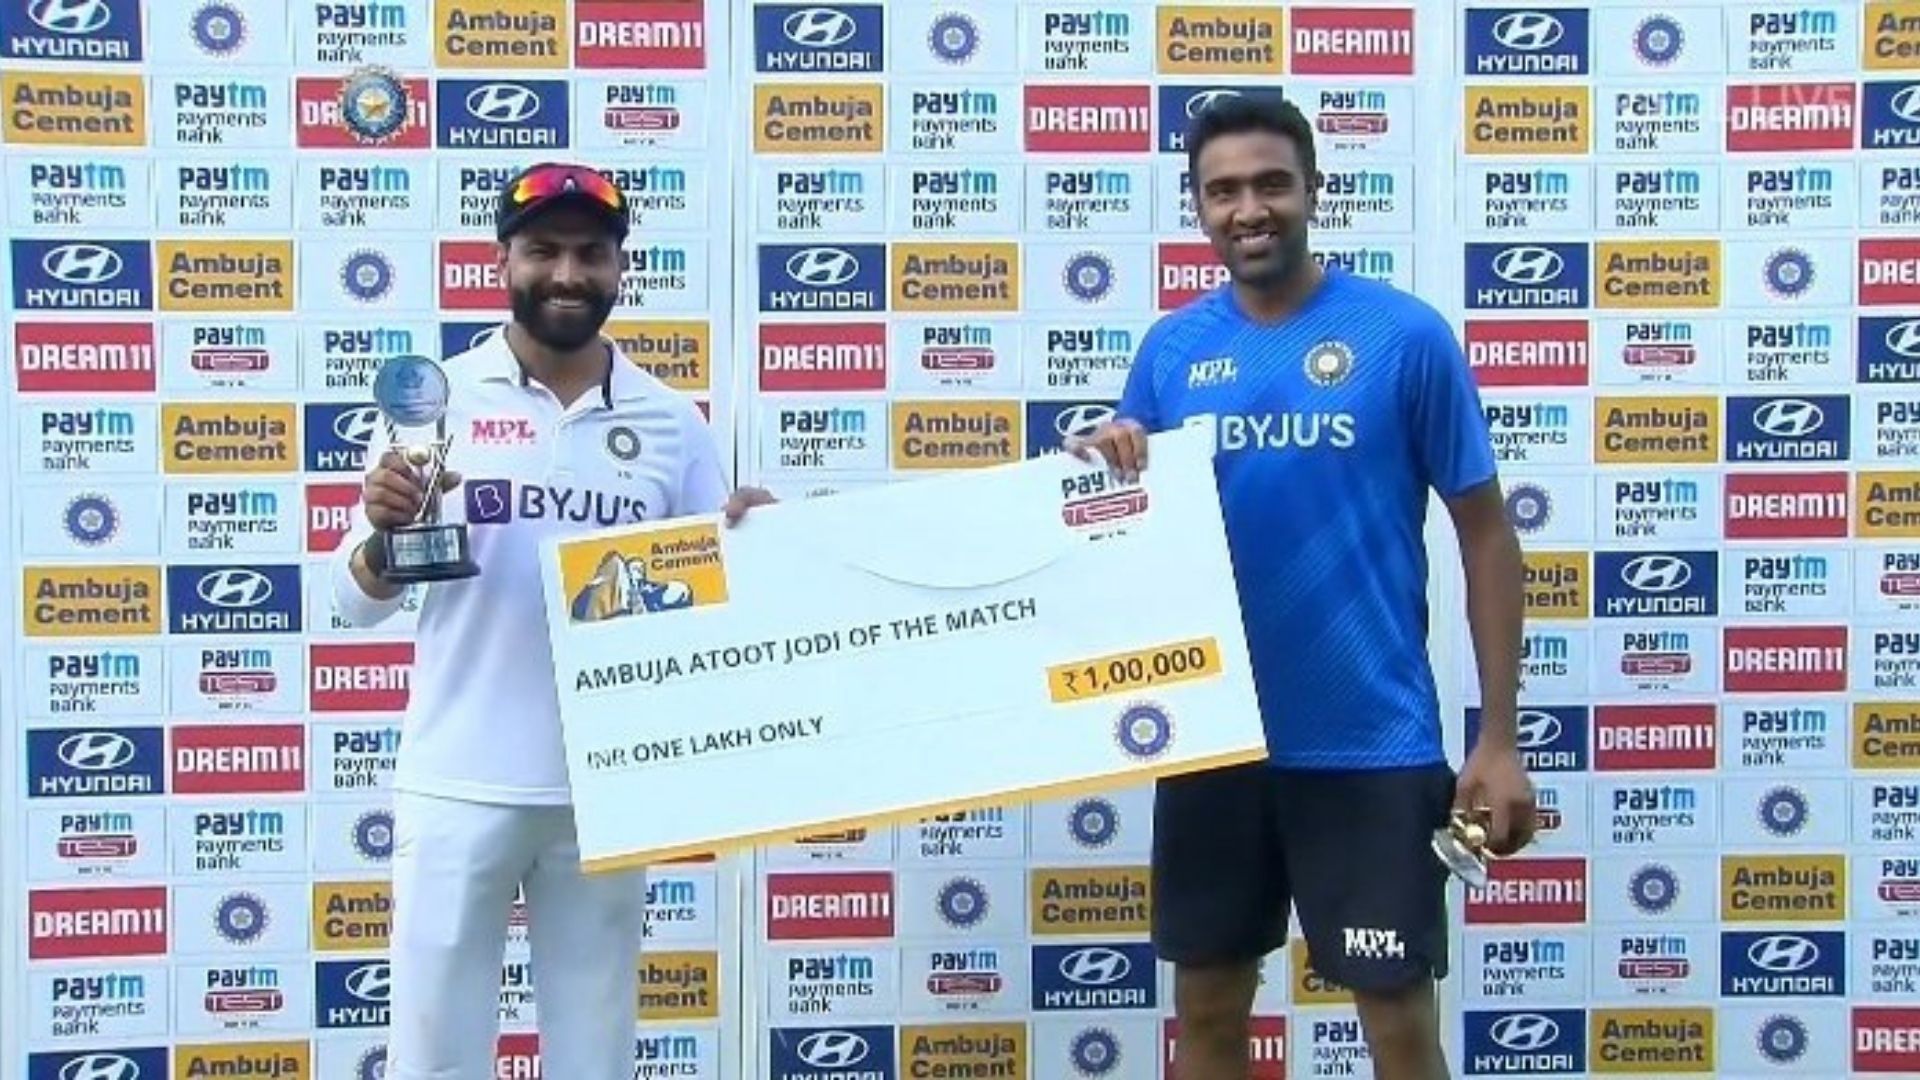 Ashwin and Jadeja put on a stellar all-round show against Sri Lanka at Mohali